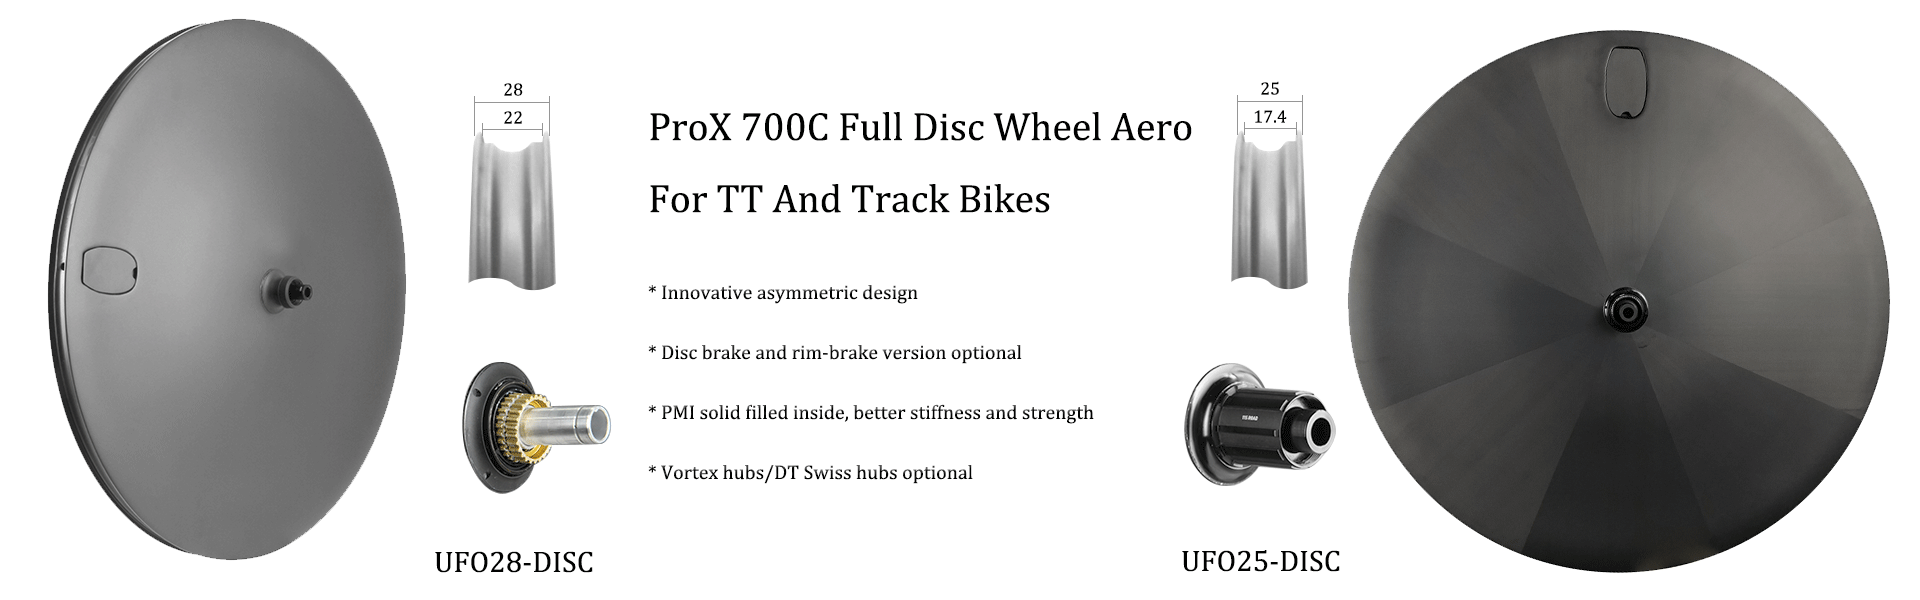 ProX Super Aero Full Disc Caroon Wheel